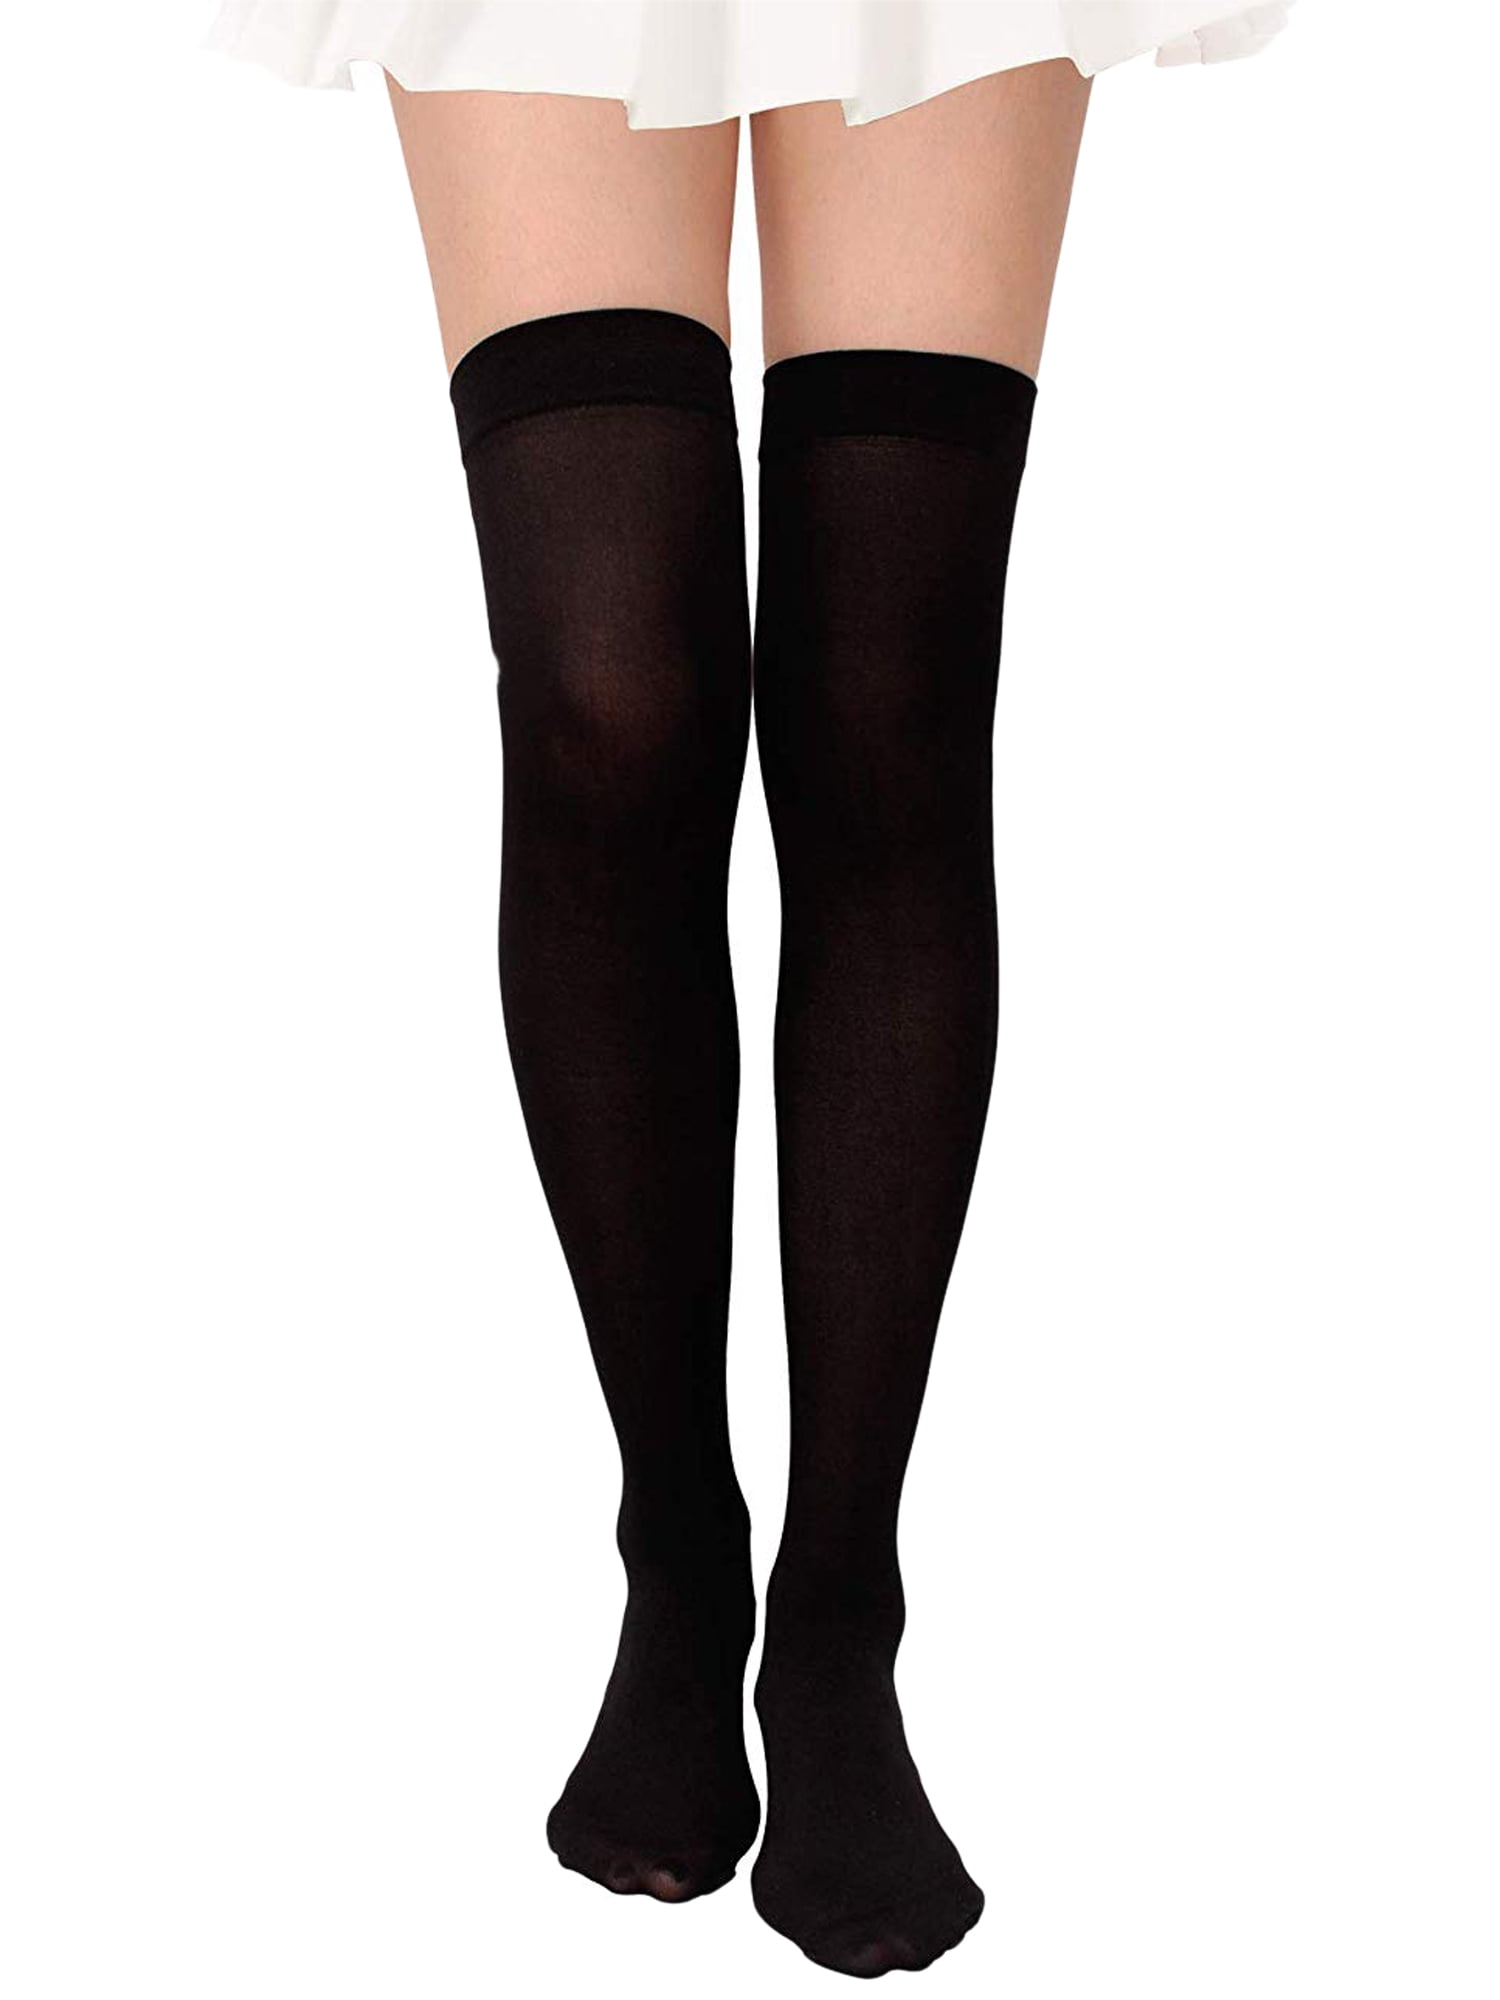 Sheer Thigh High Stockings Adult Womens Black/Red/White Hosiery Std/Plus Sizes 